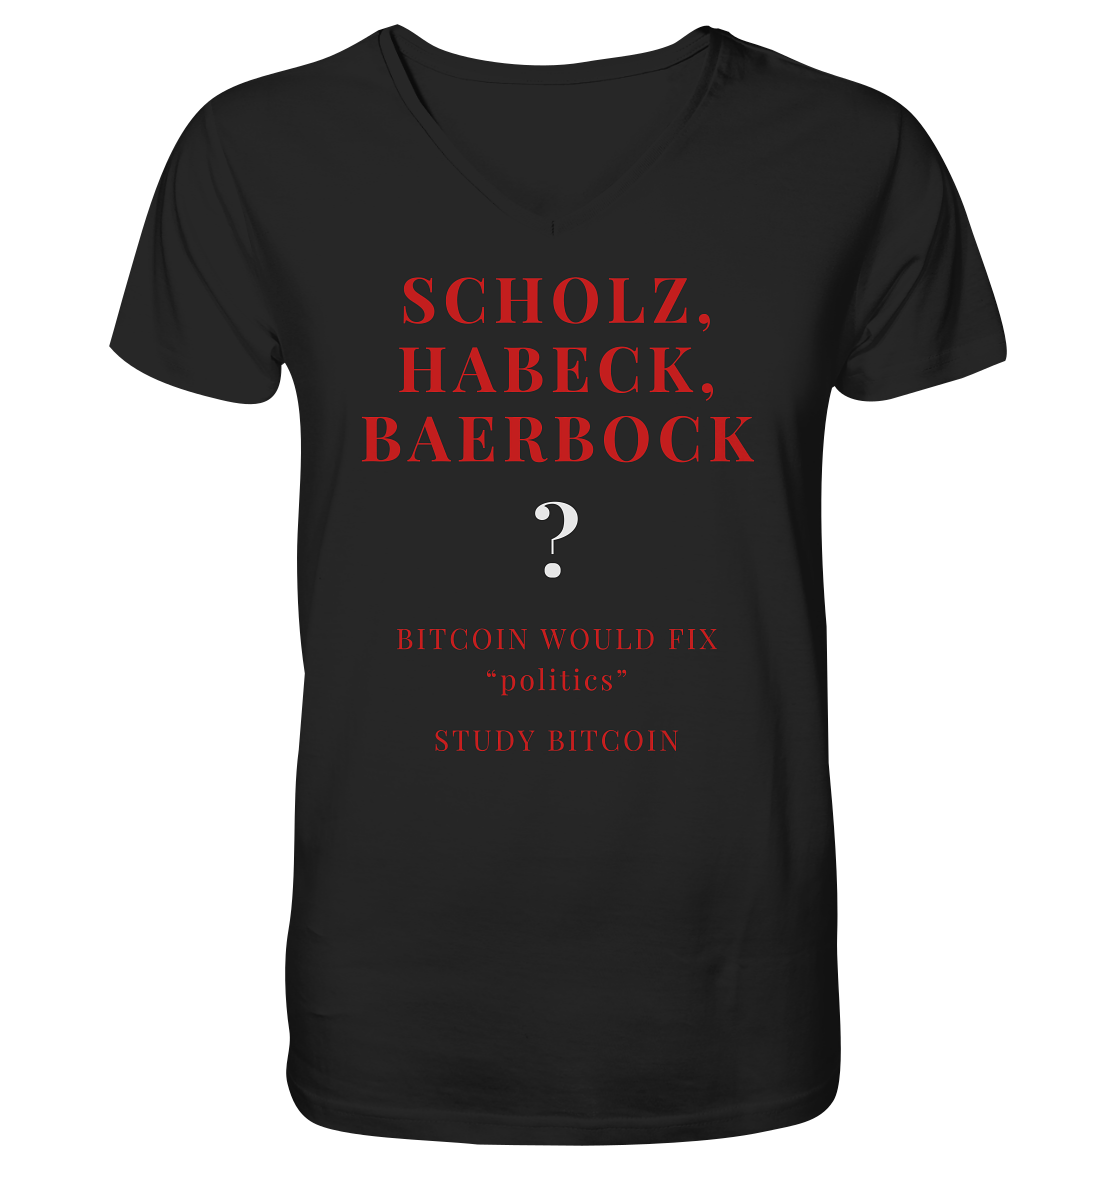 SCHOLZ, HABECK, BAERBOCK ? BITCOIN WOULD FIX "politics" - STUDY BITCOIN  - V-Neck Shirt